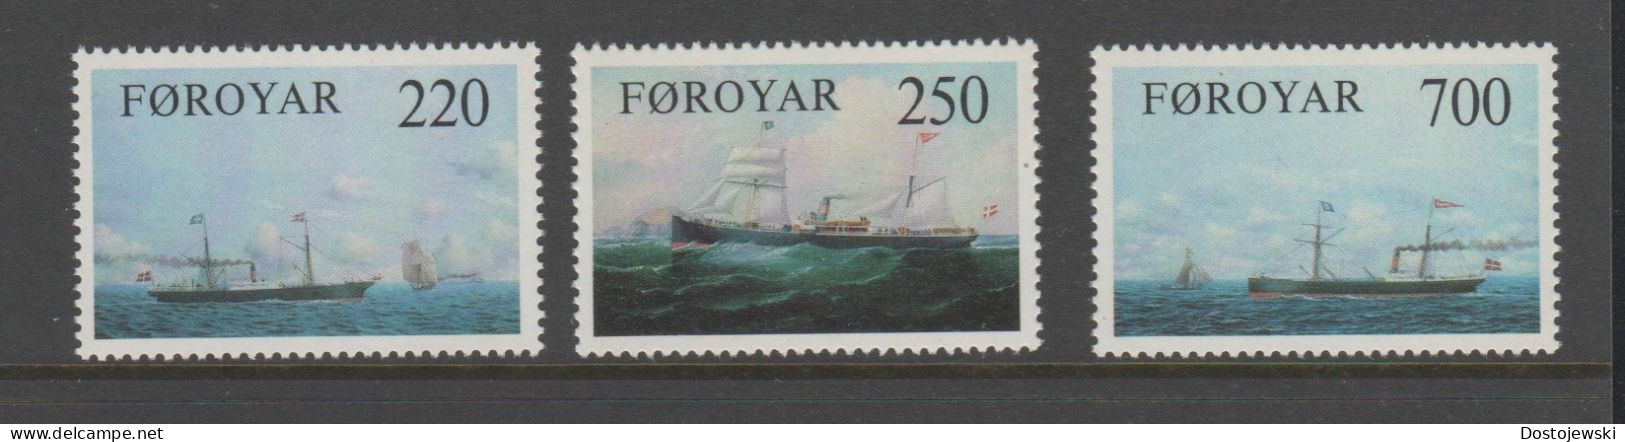 Färöer - Faroe Islands, Michel-Nr. 79-81 Postfrisch **, Mnh Steam Ships 1983 - Faroe Islands